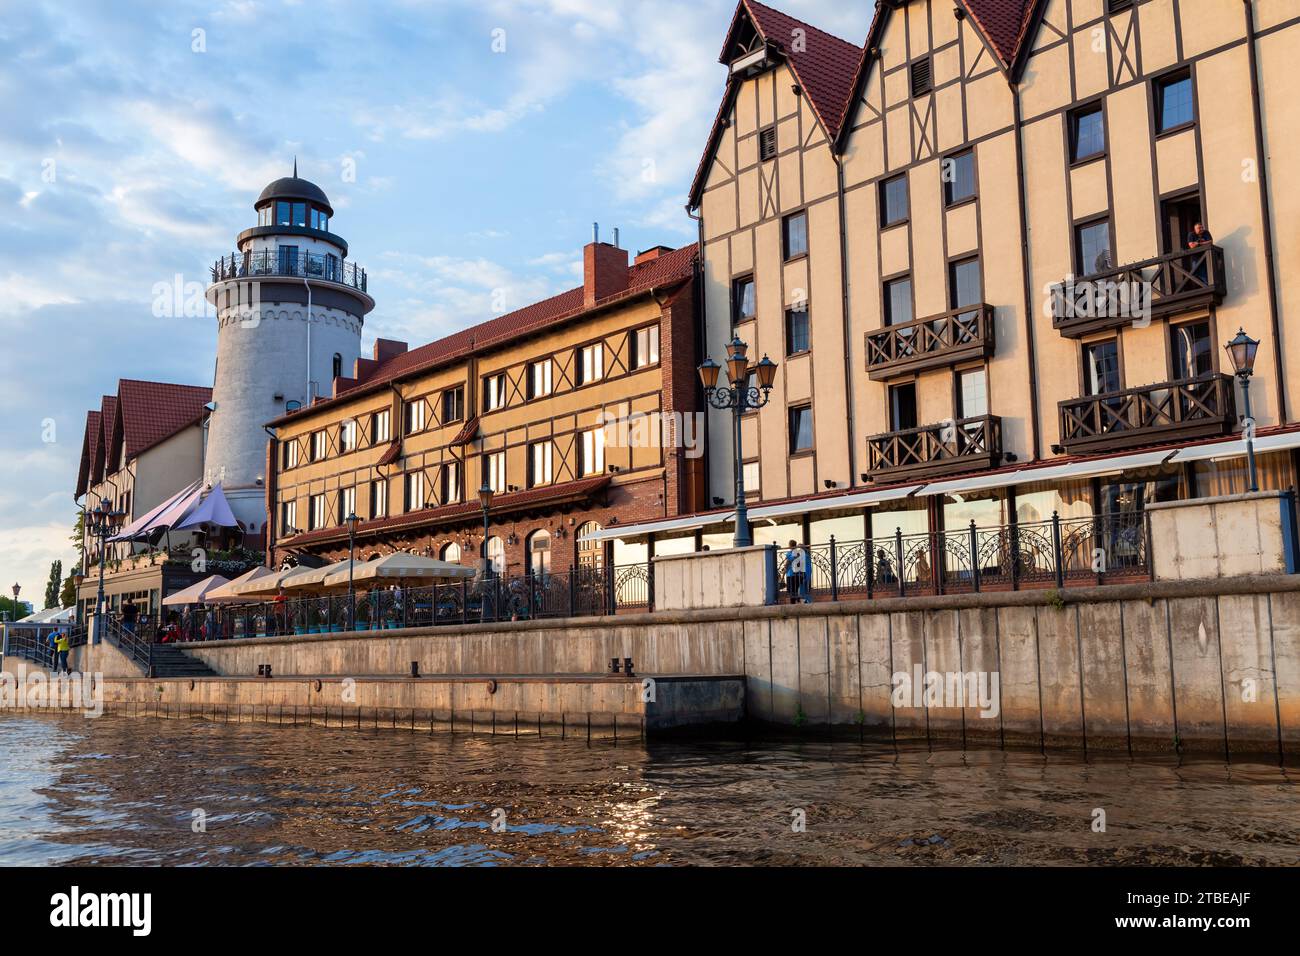 Kaliningrad, Russia - July 30, 2021: Fishing village. District of Kaliningrad city, coastal photo with lighthouse tower Stock Photo